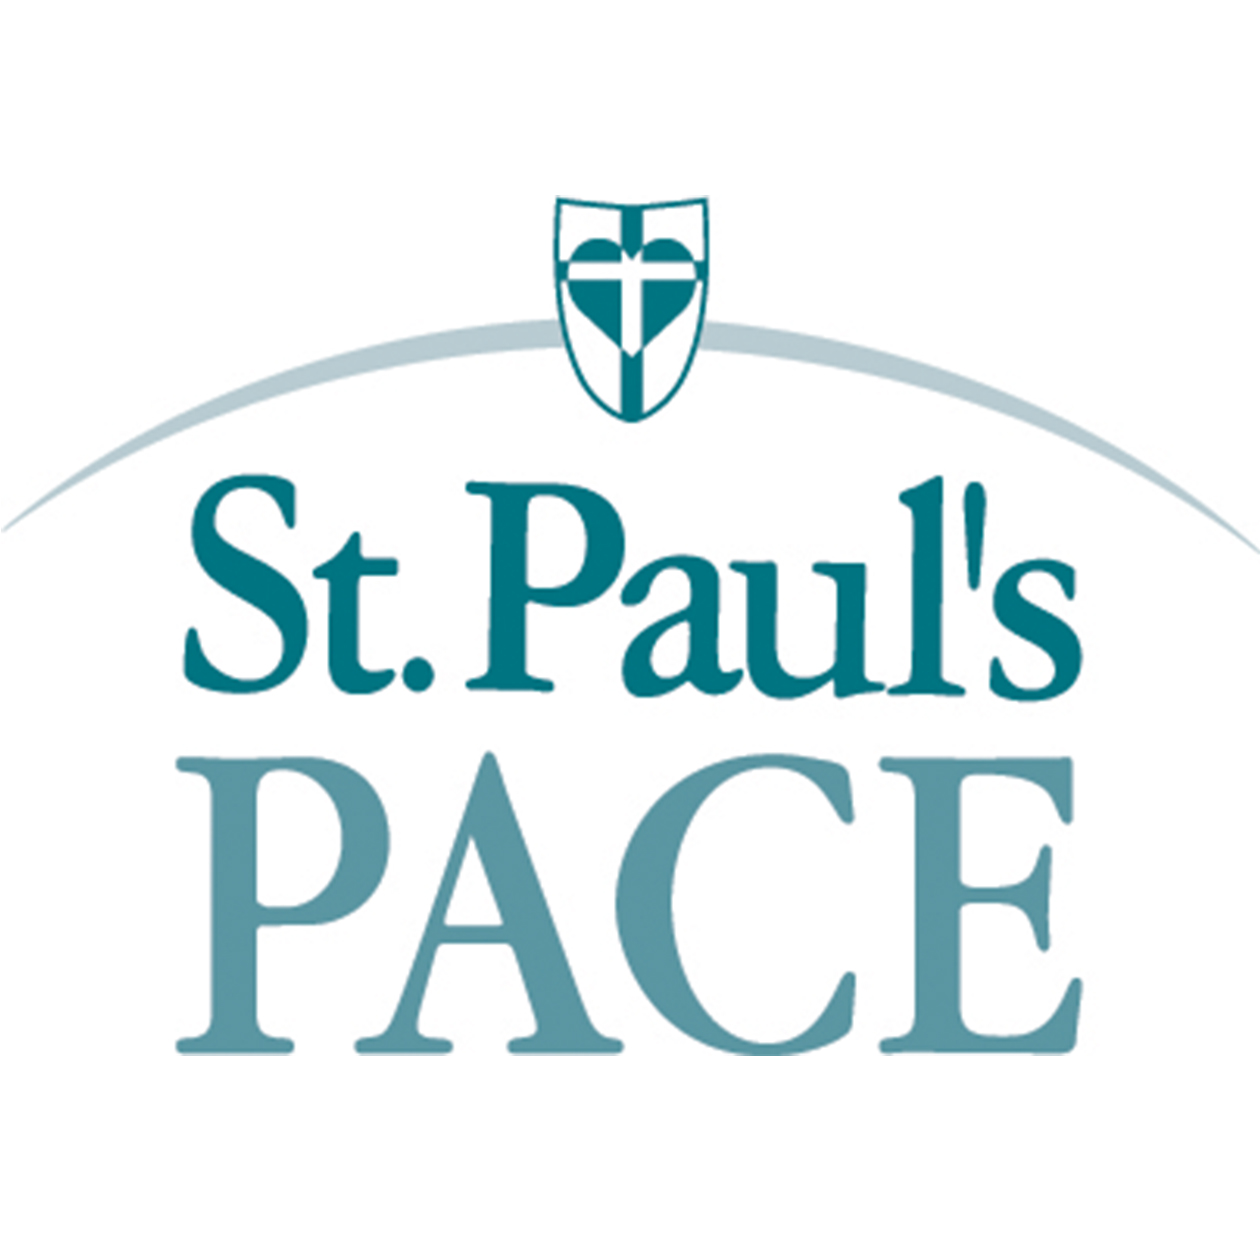 St. Paul's PACE-square